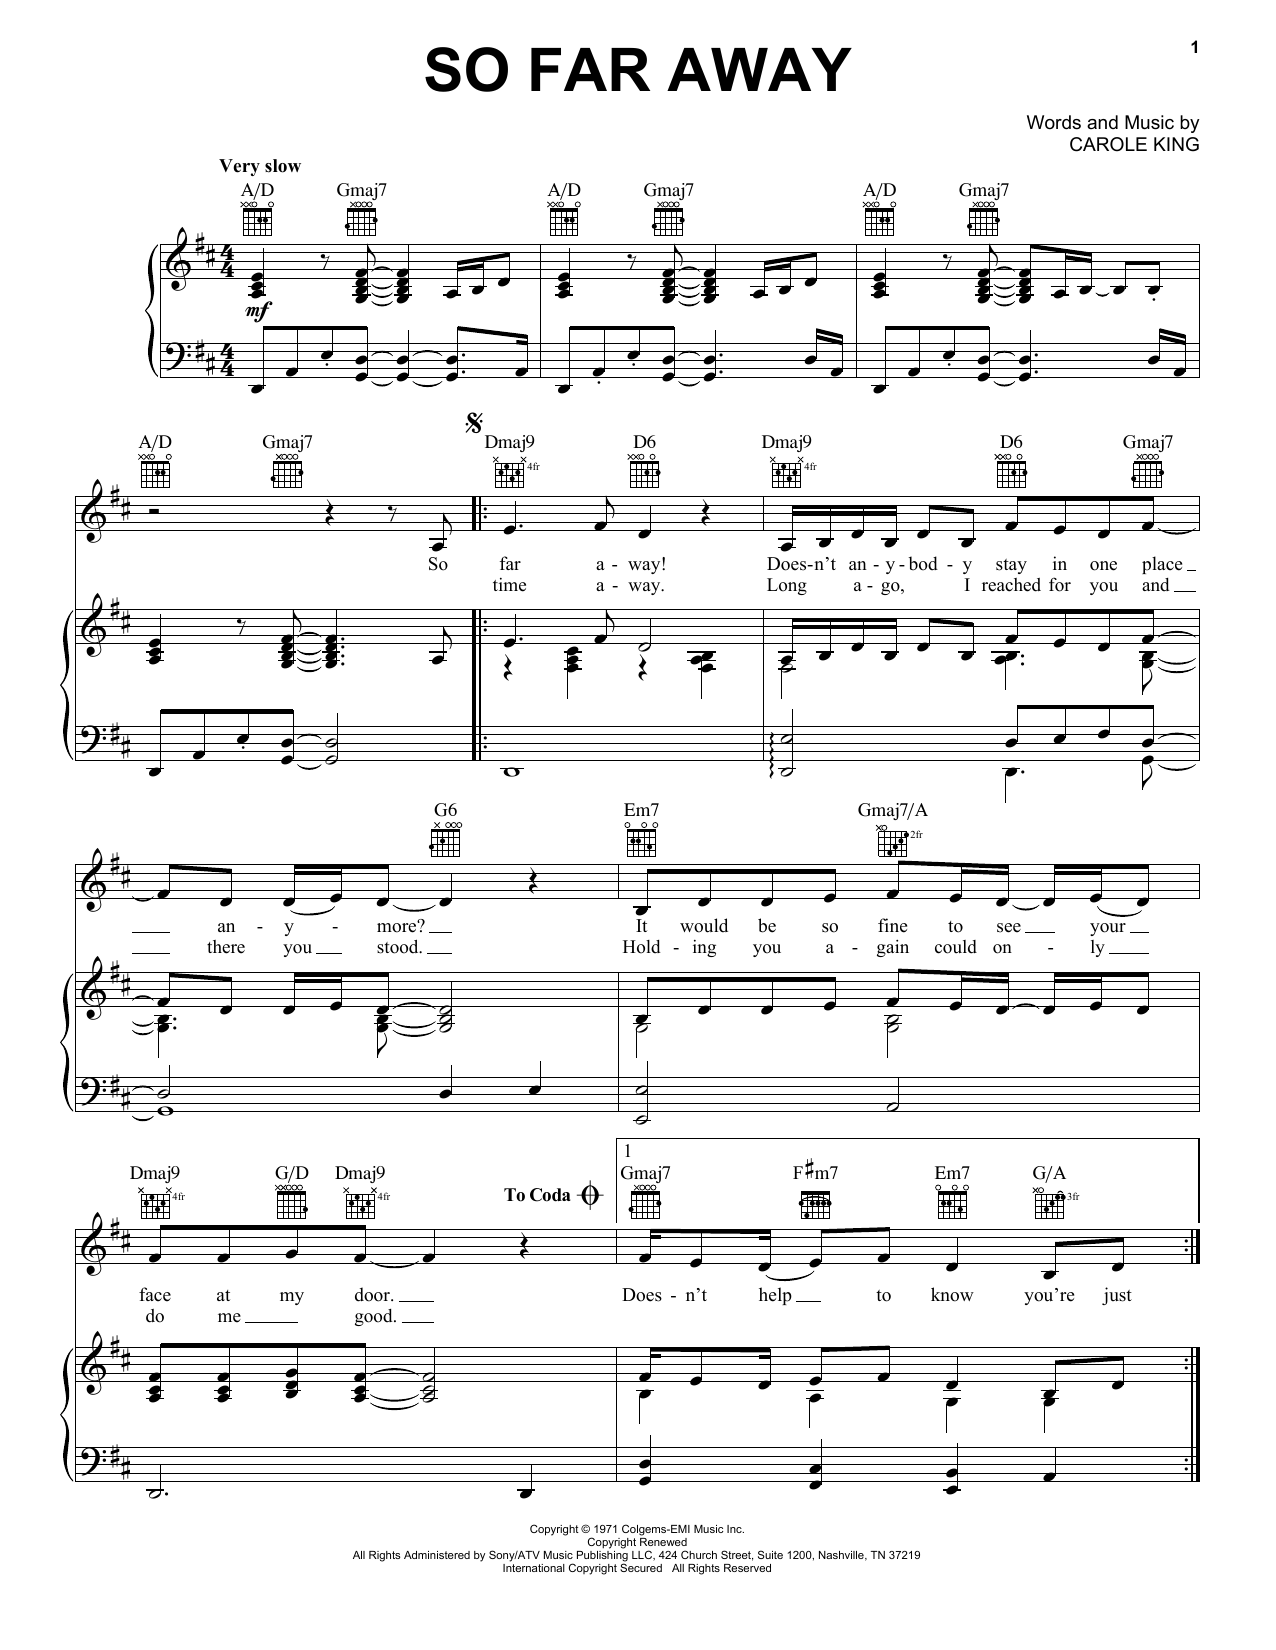 Carole King So Far Away Sheet Music Notes & Chords for Ukulele - Download or Print PDF